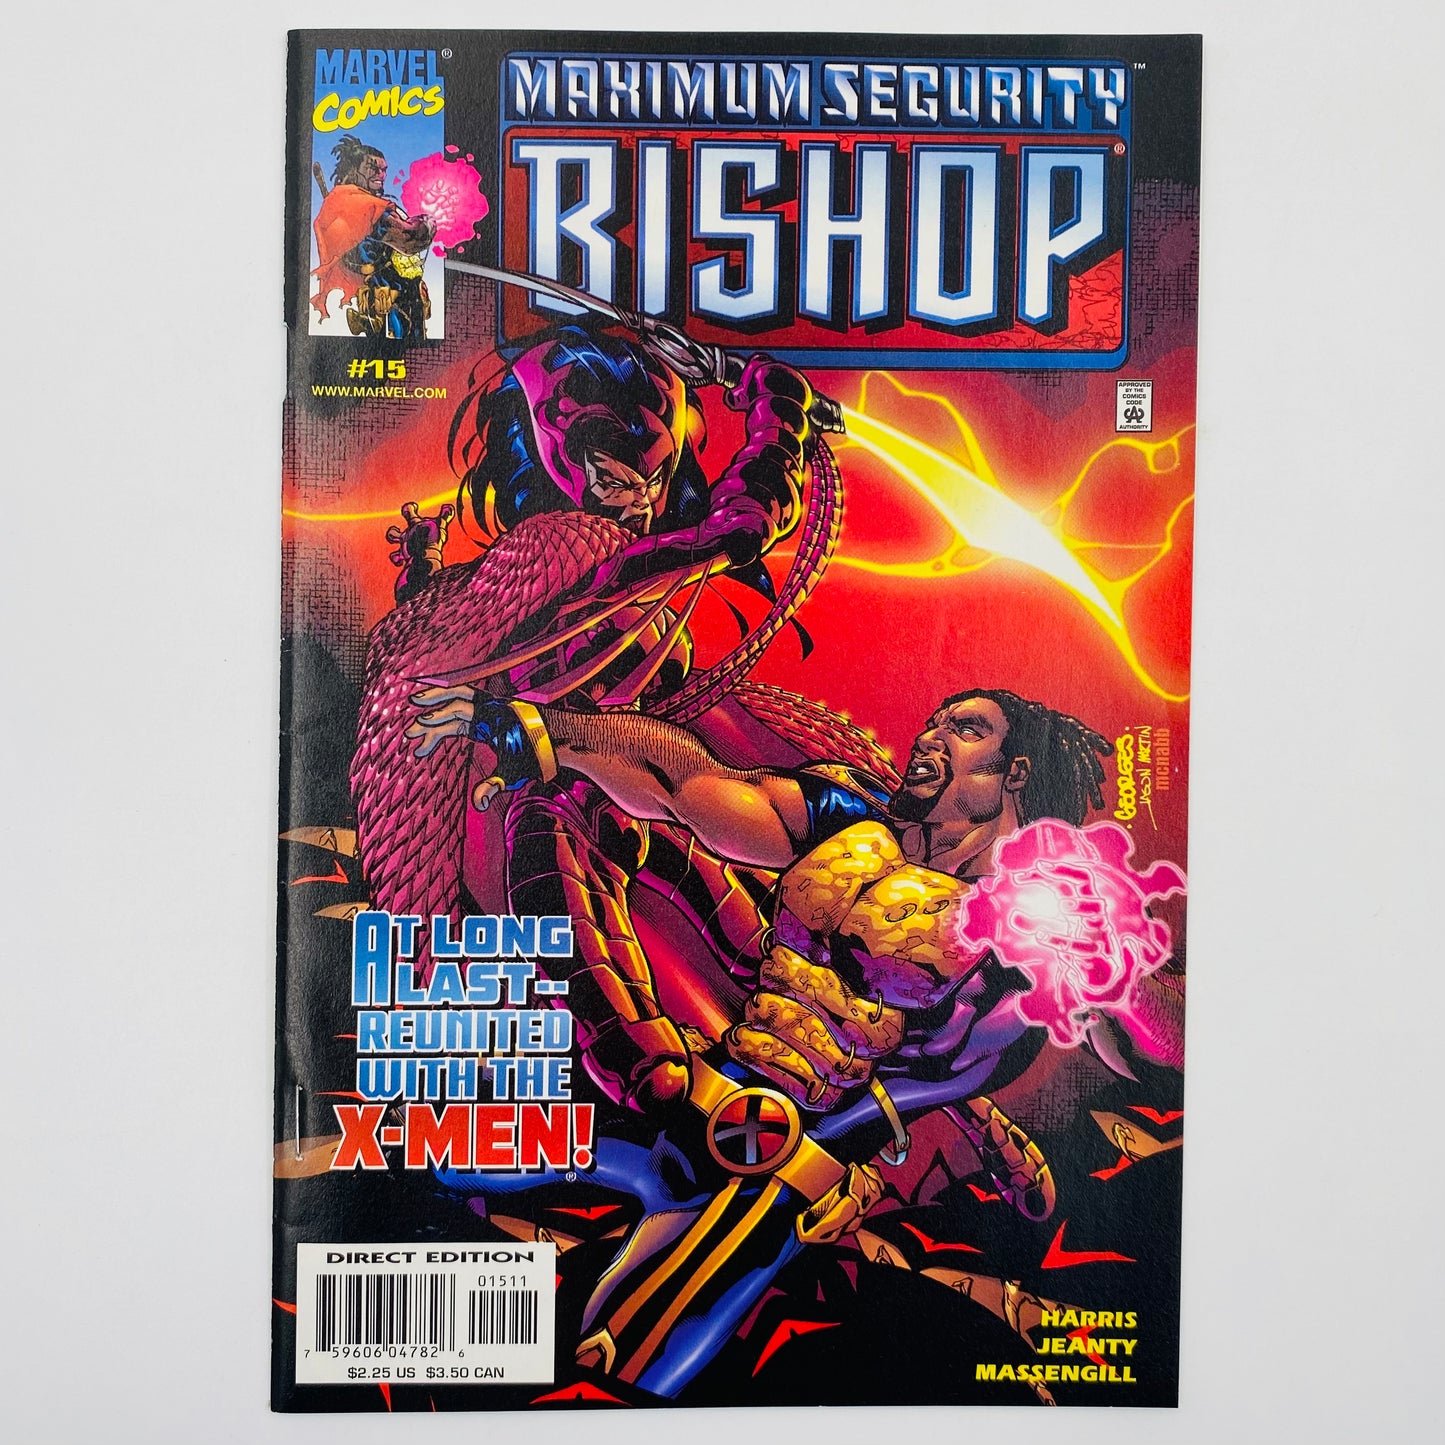 Bishop The Last Man #1-16 (1999-2001) Marvel